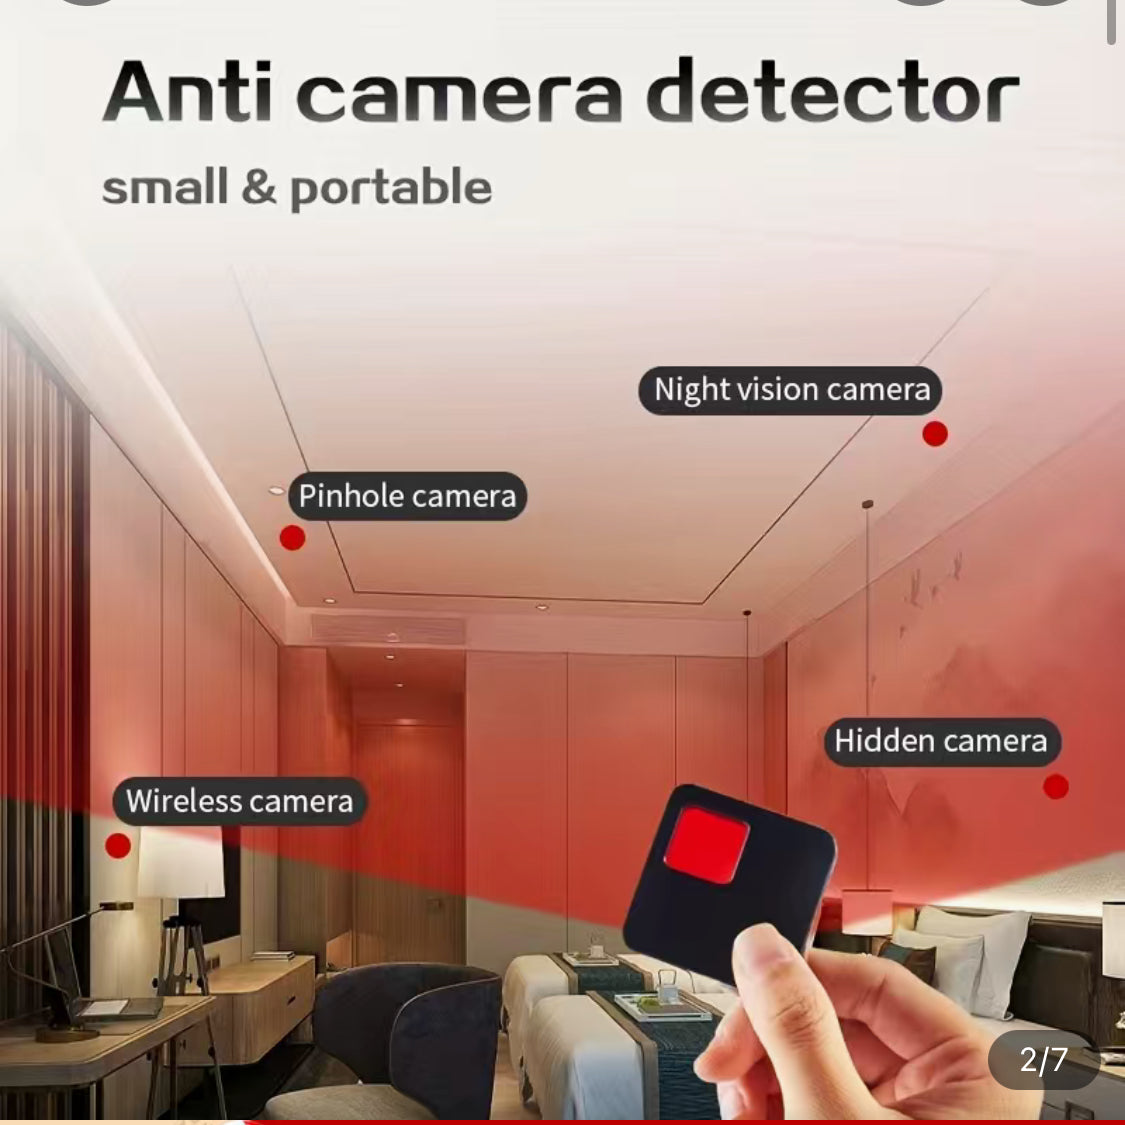 Anti Camera Detector Small and Portable